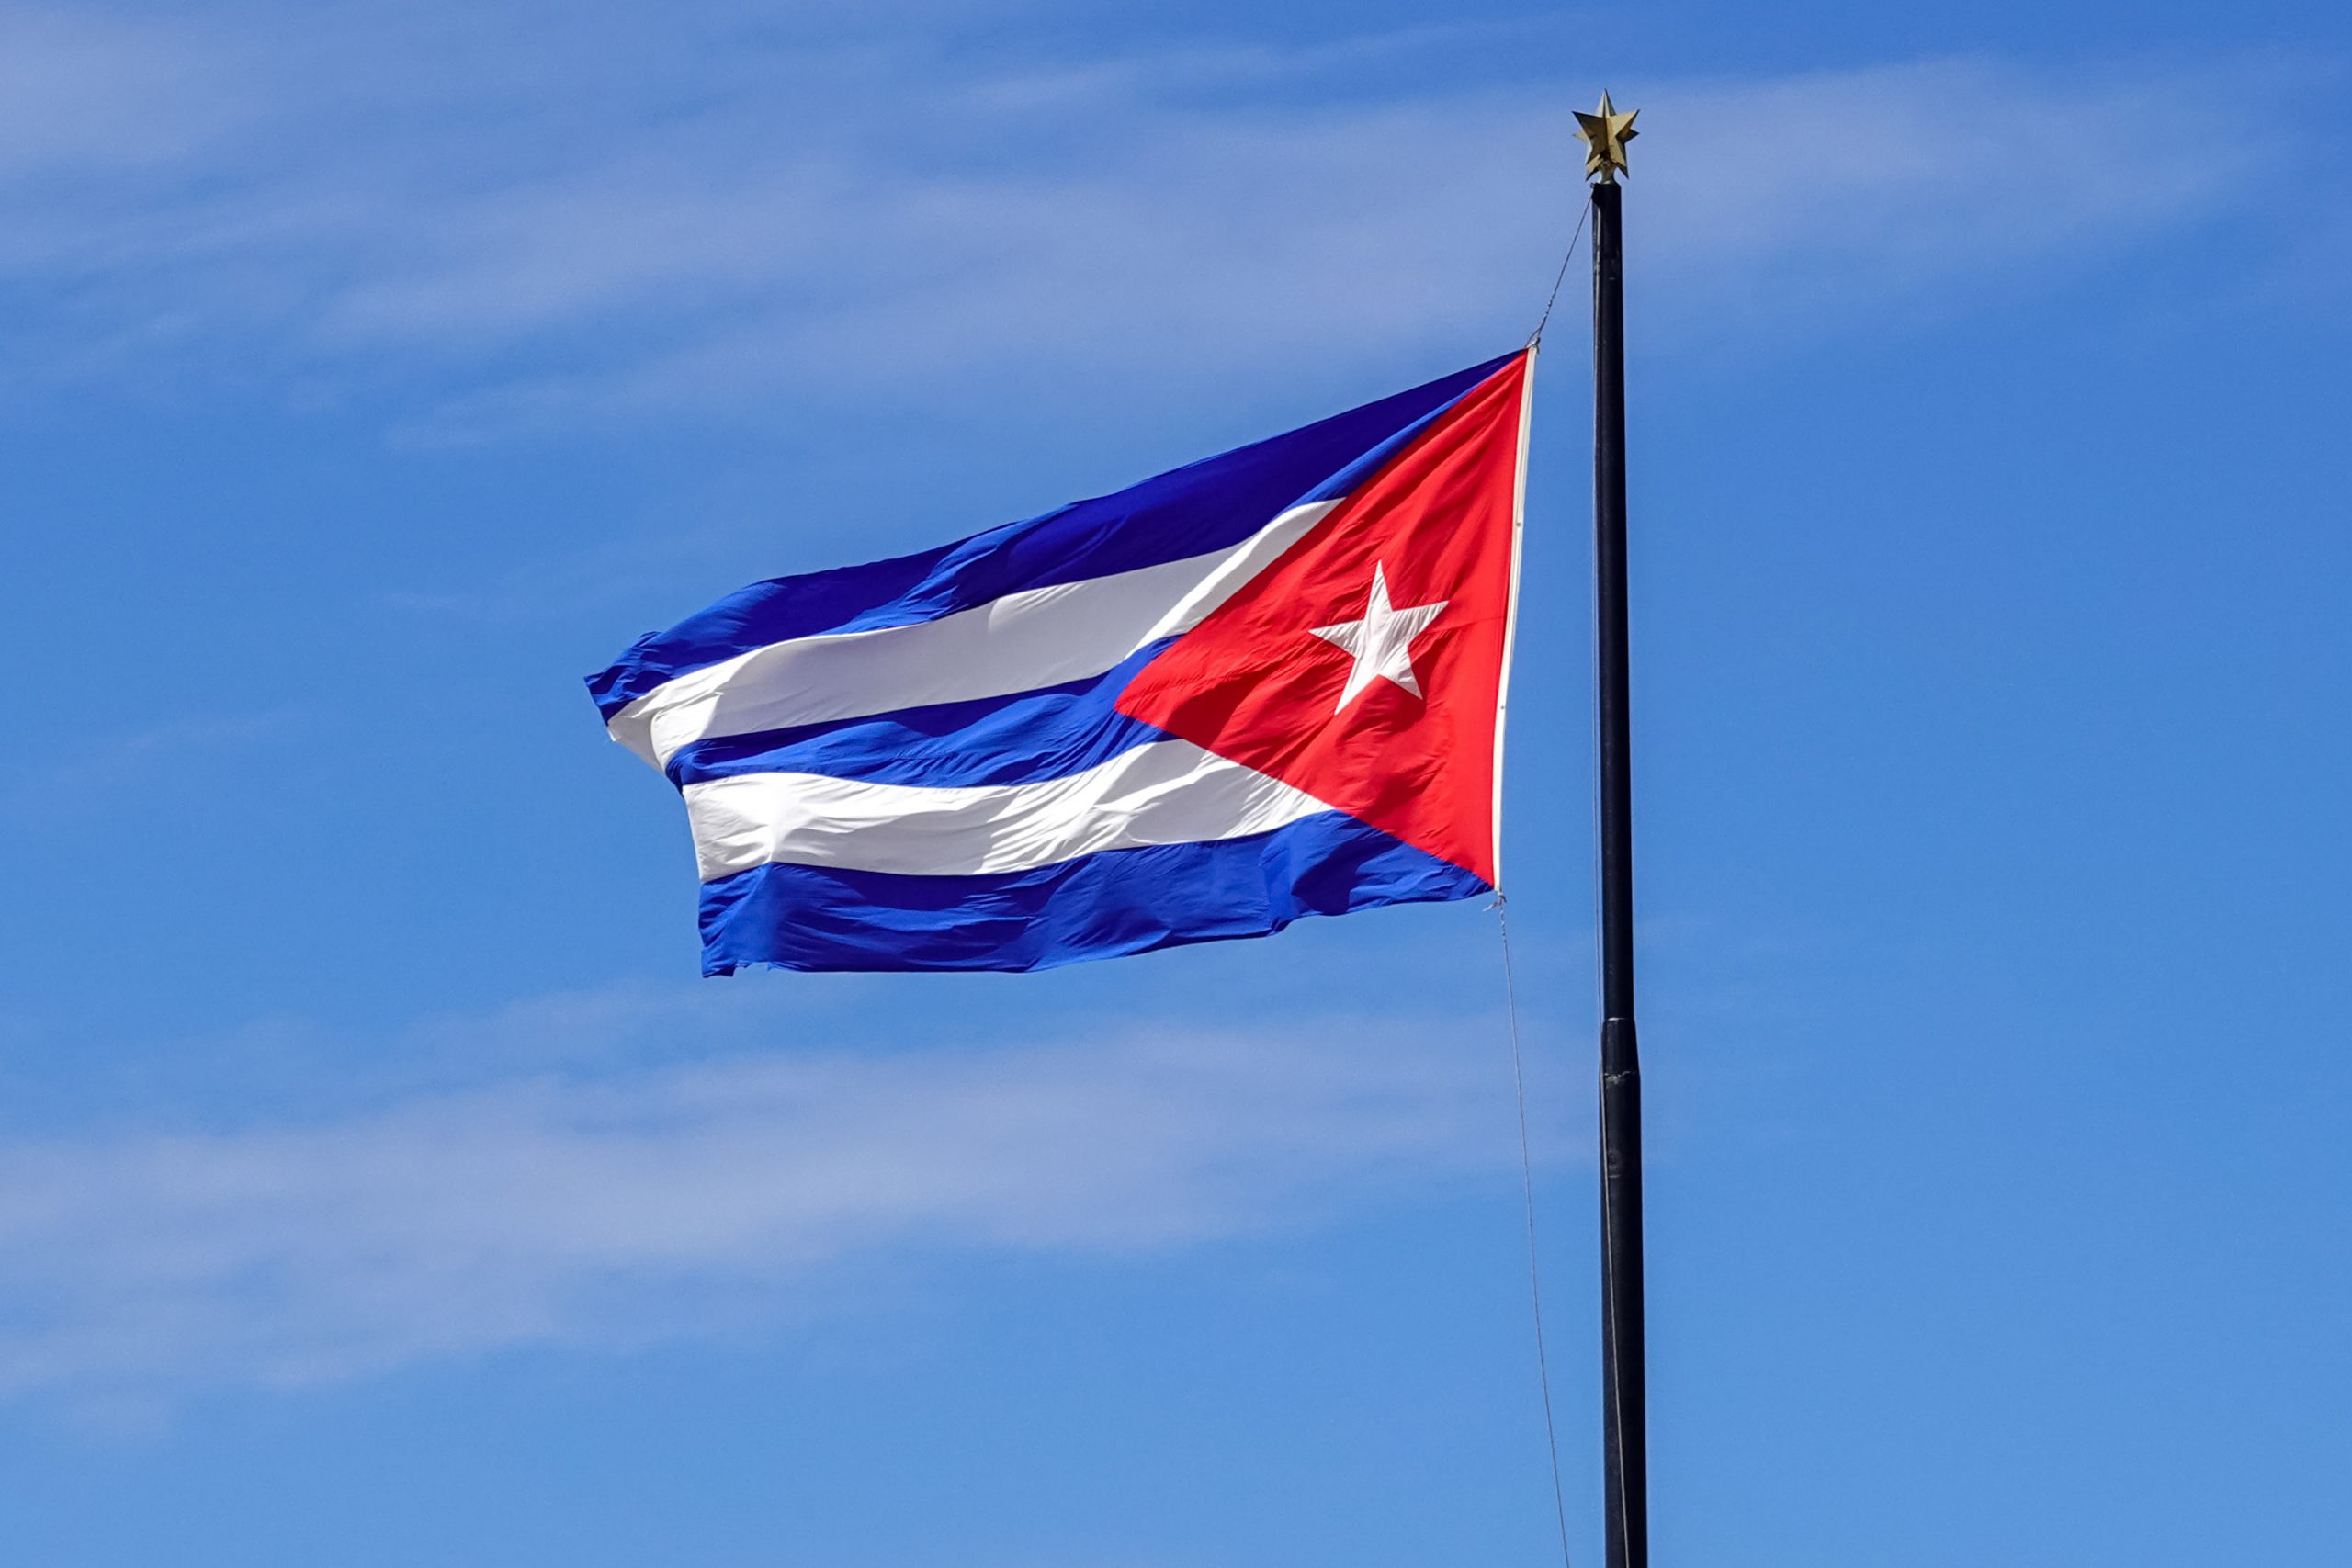 Cuba: citizenship obtaining options